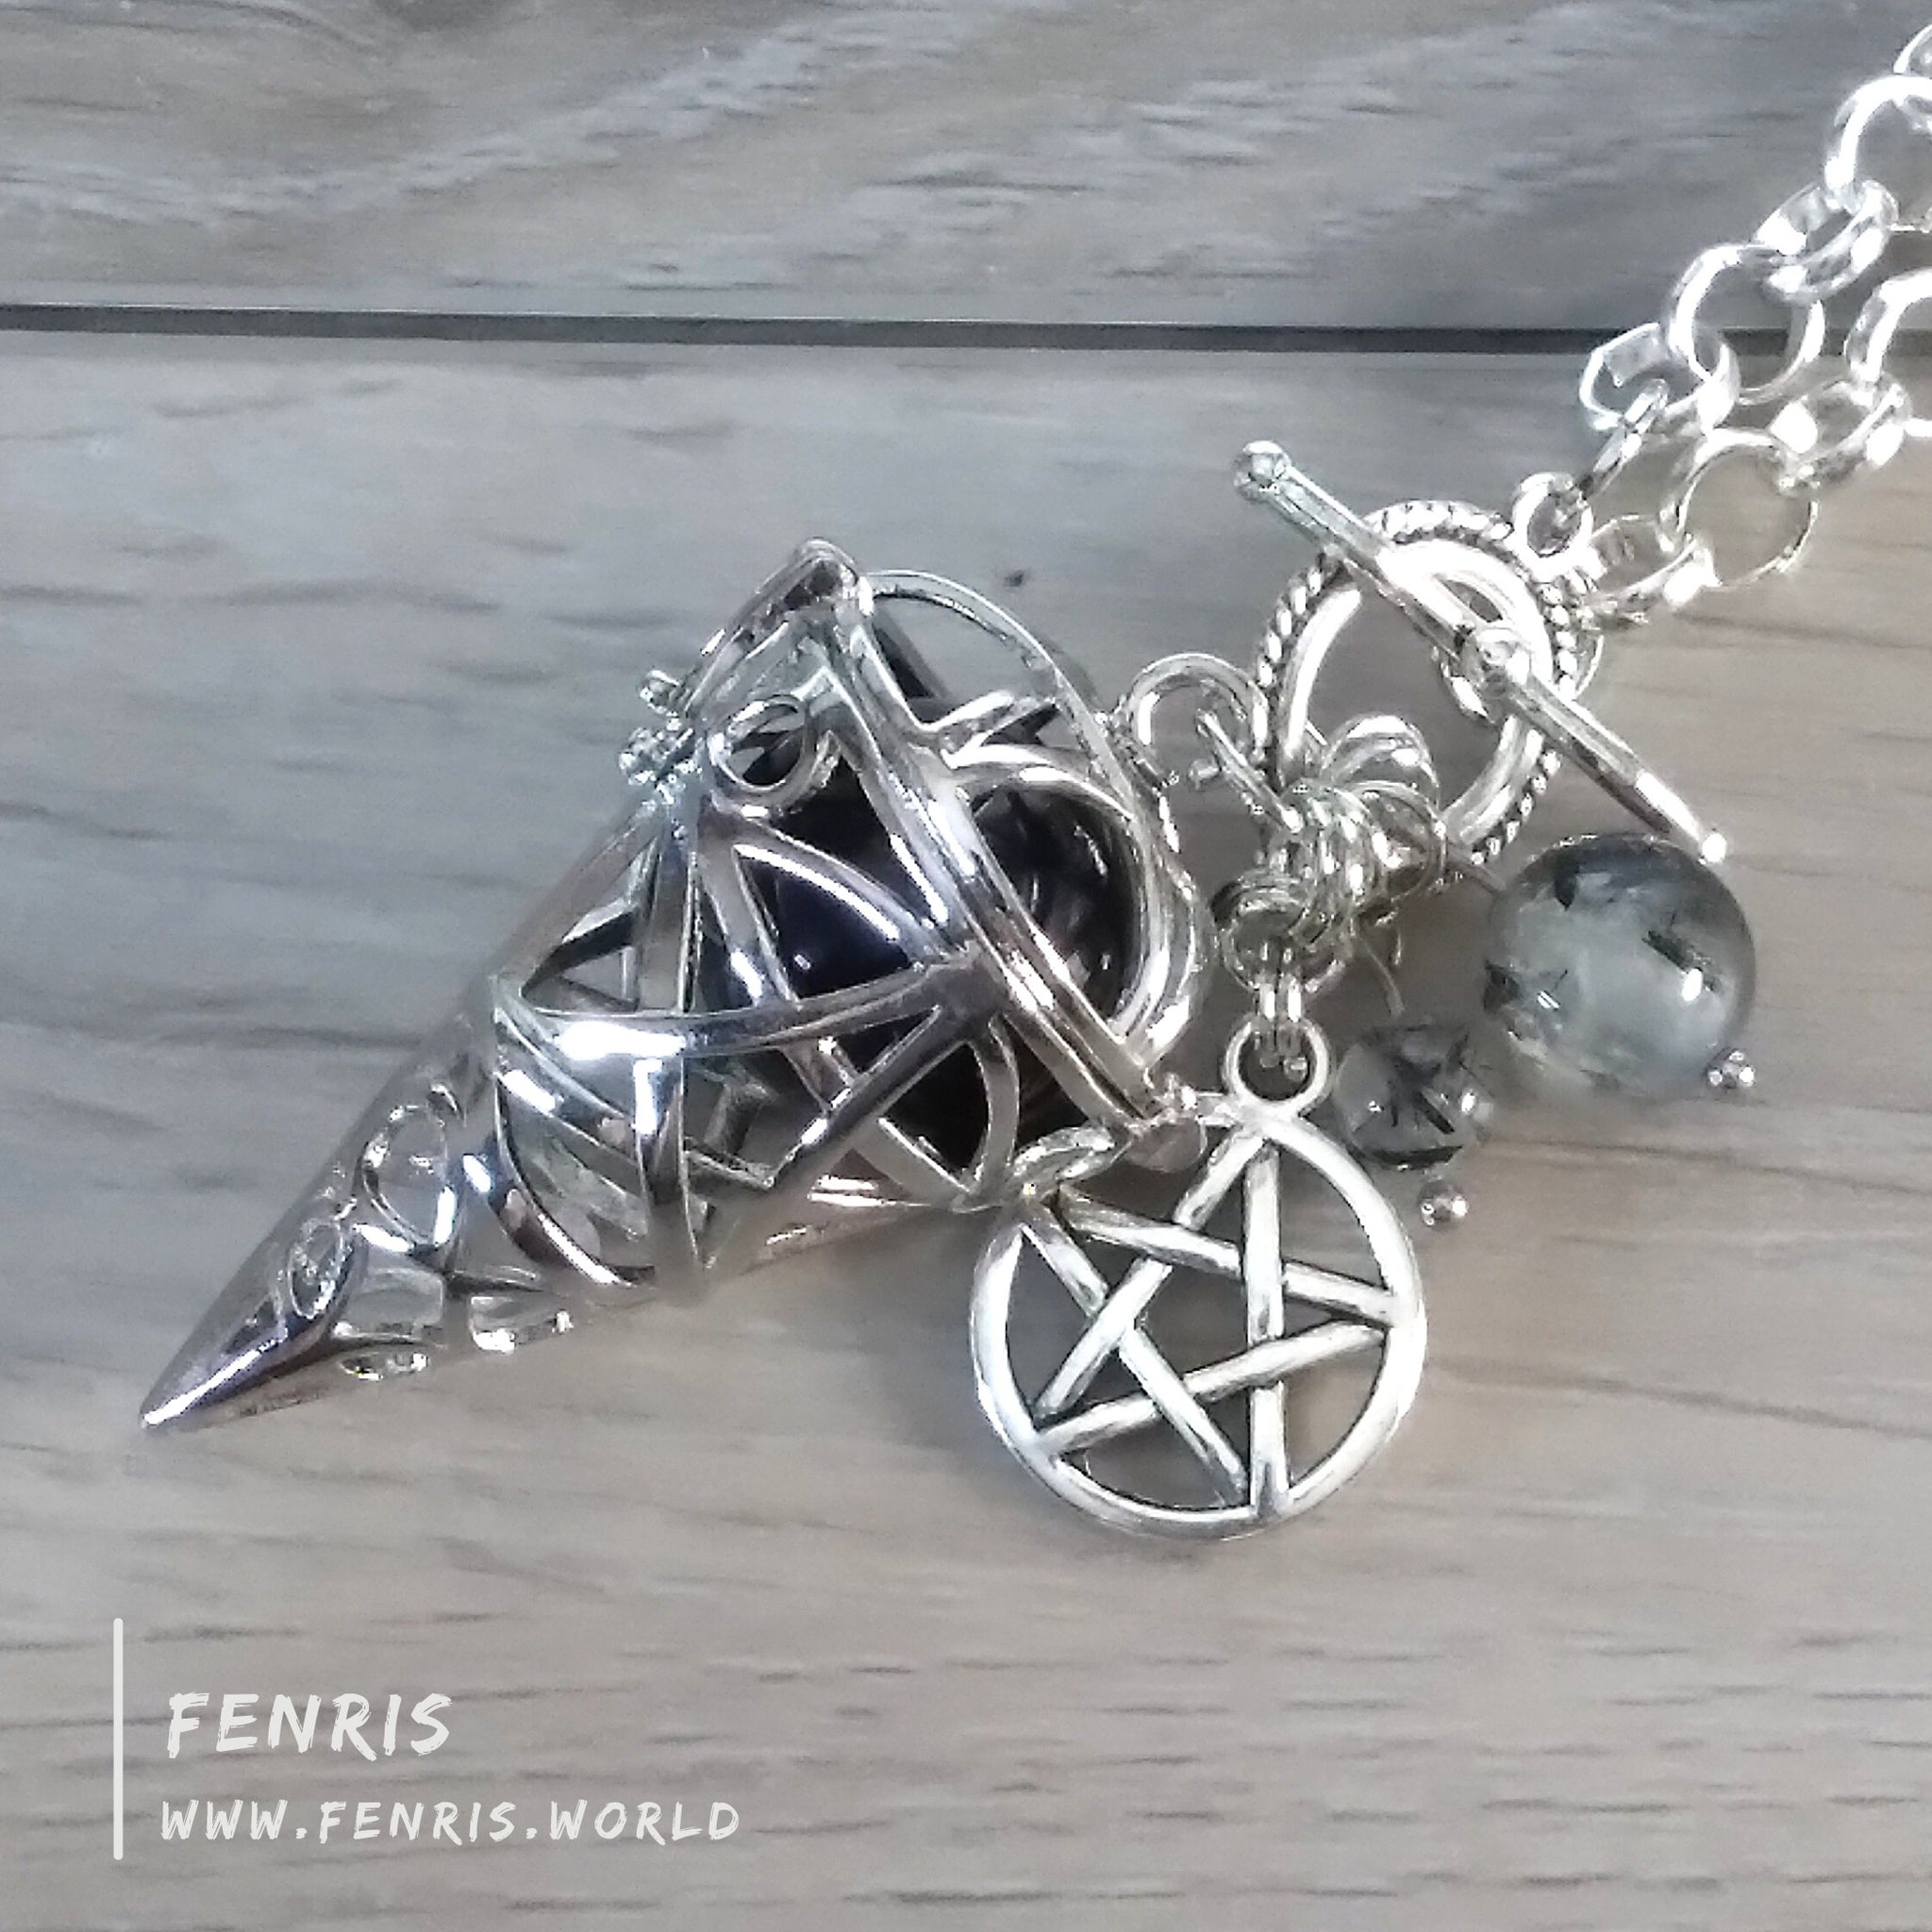 pentagram necklace